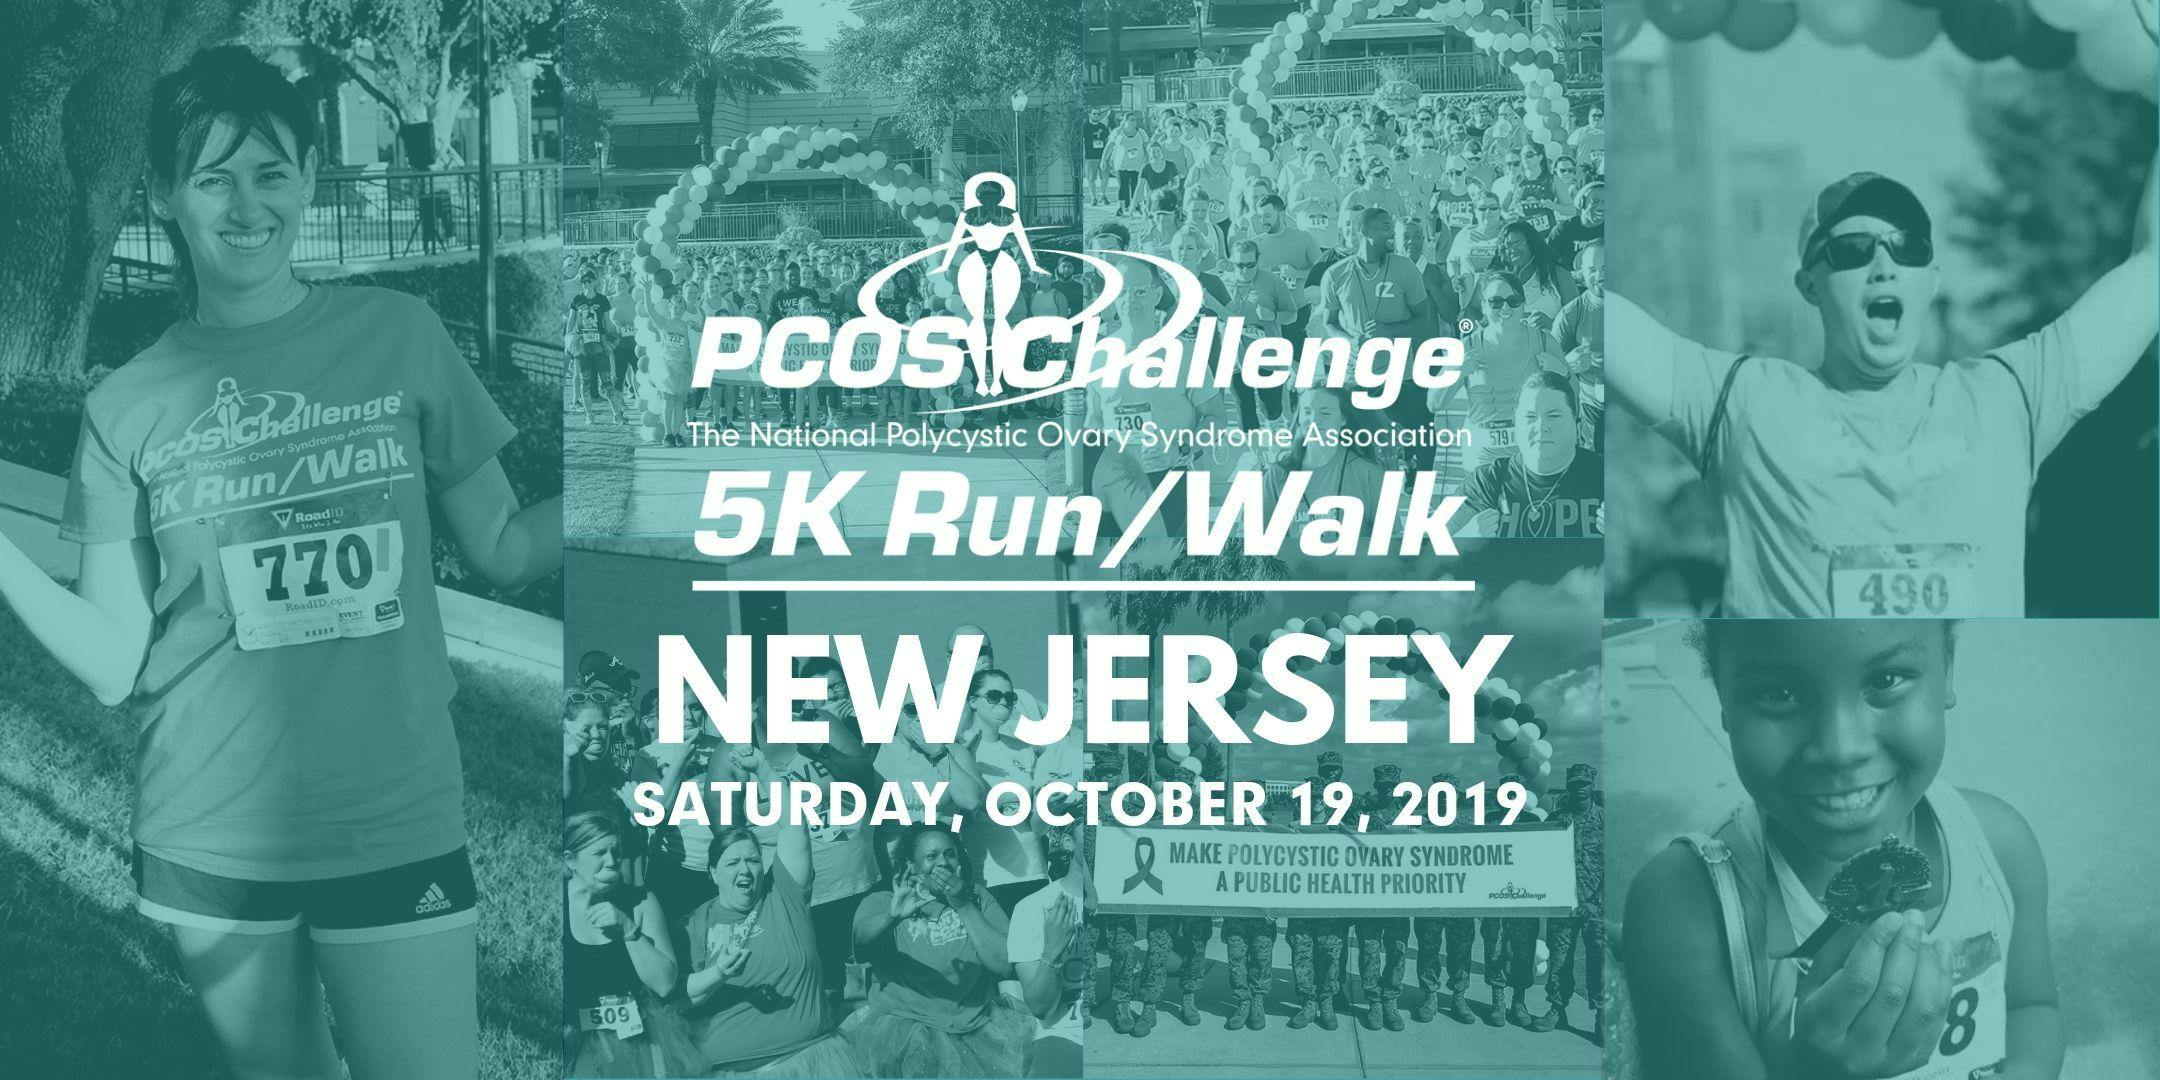 PCOS Walk 2019 - New Jersey PCOS Challenge 5K Run/Walk